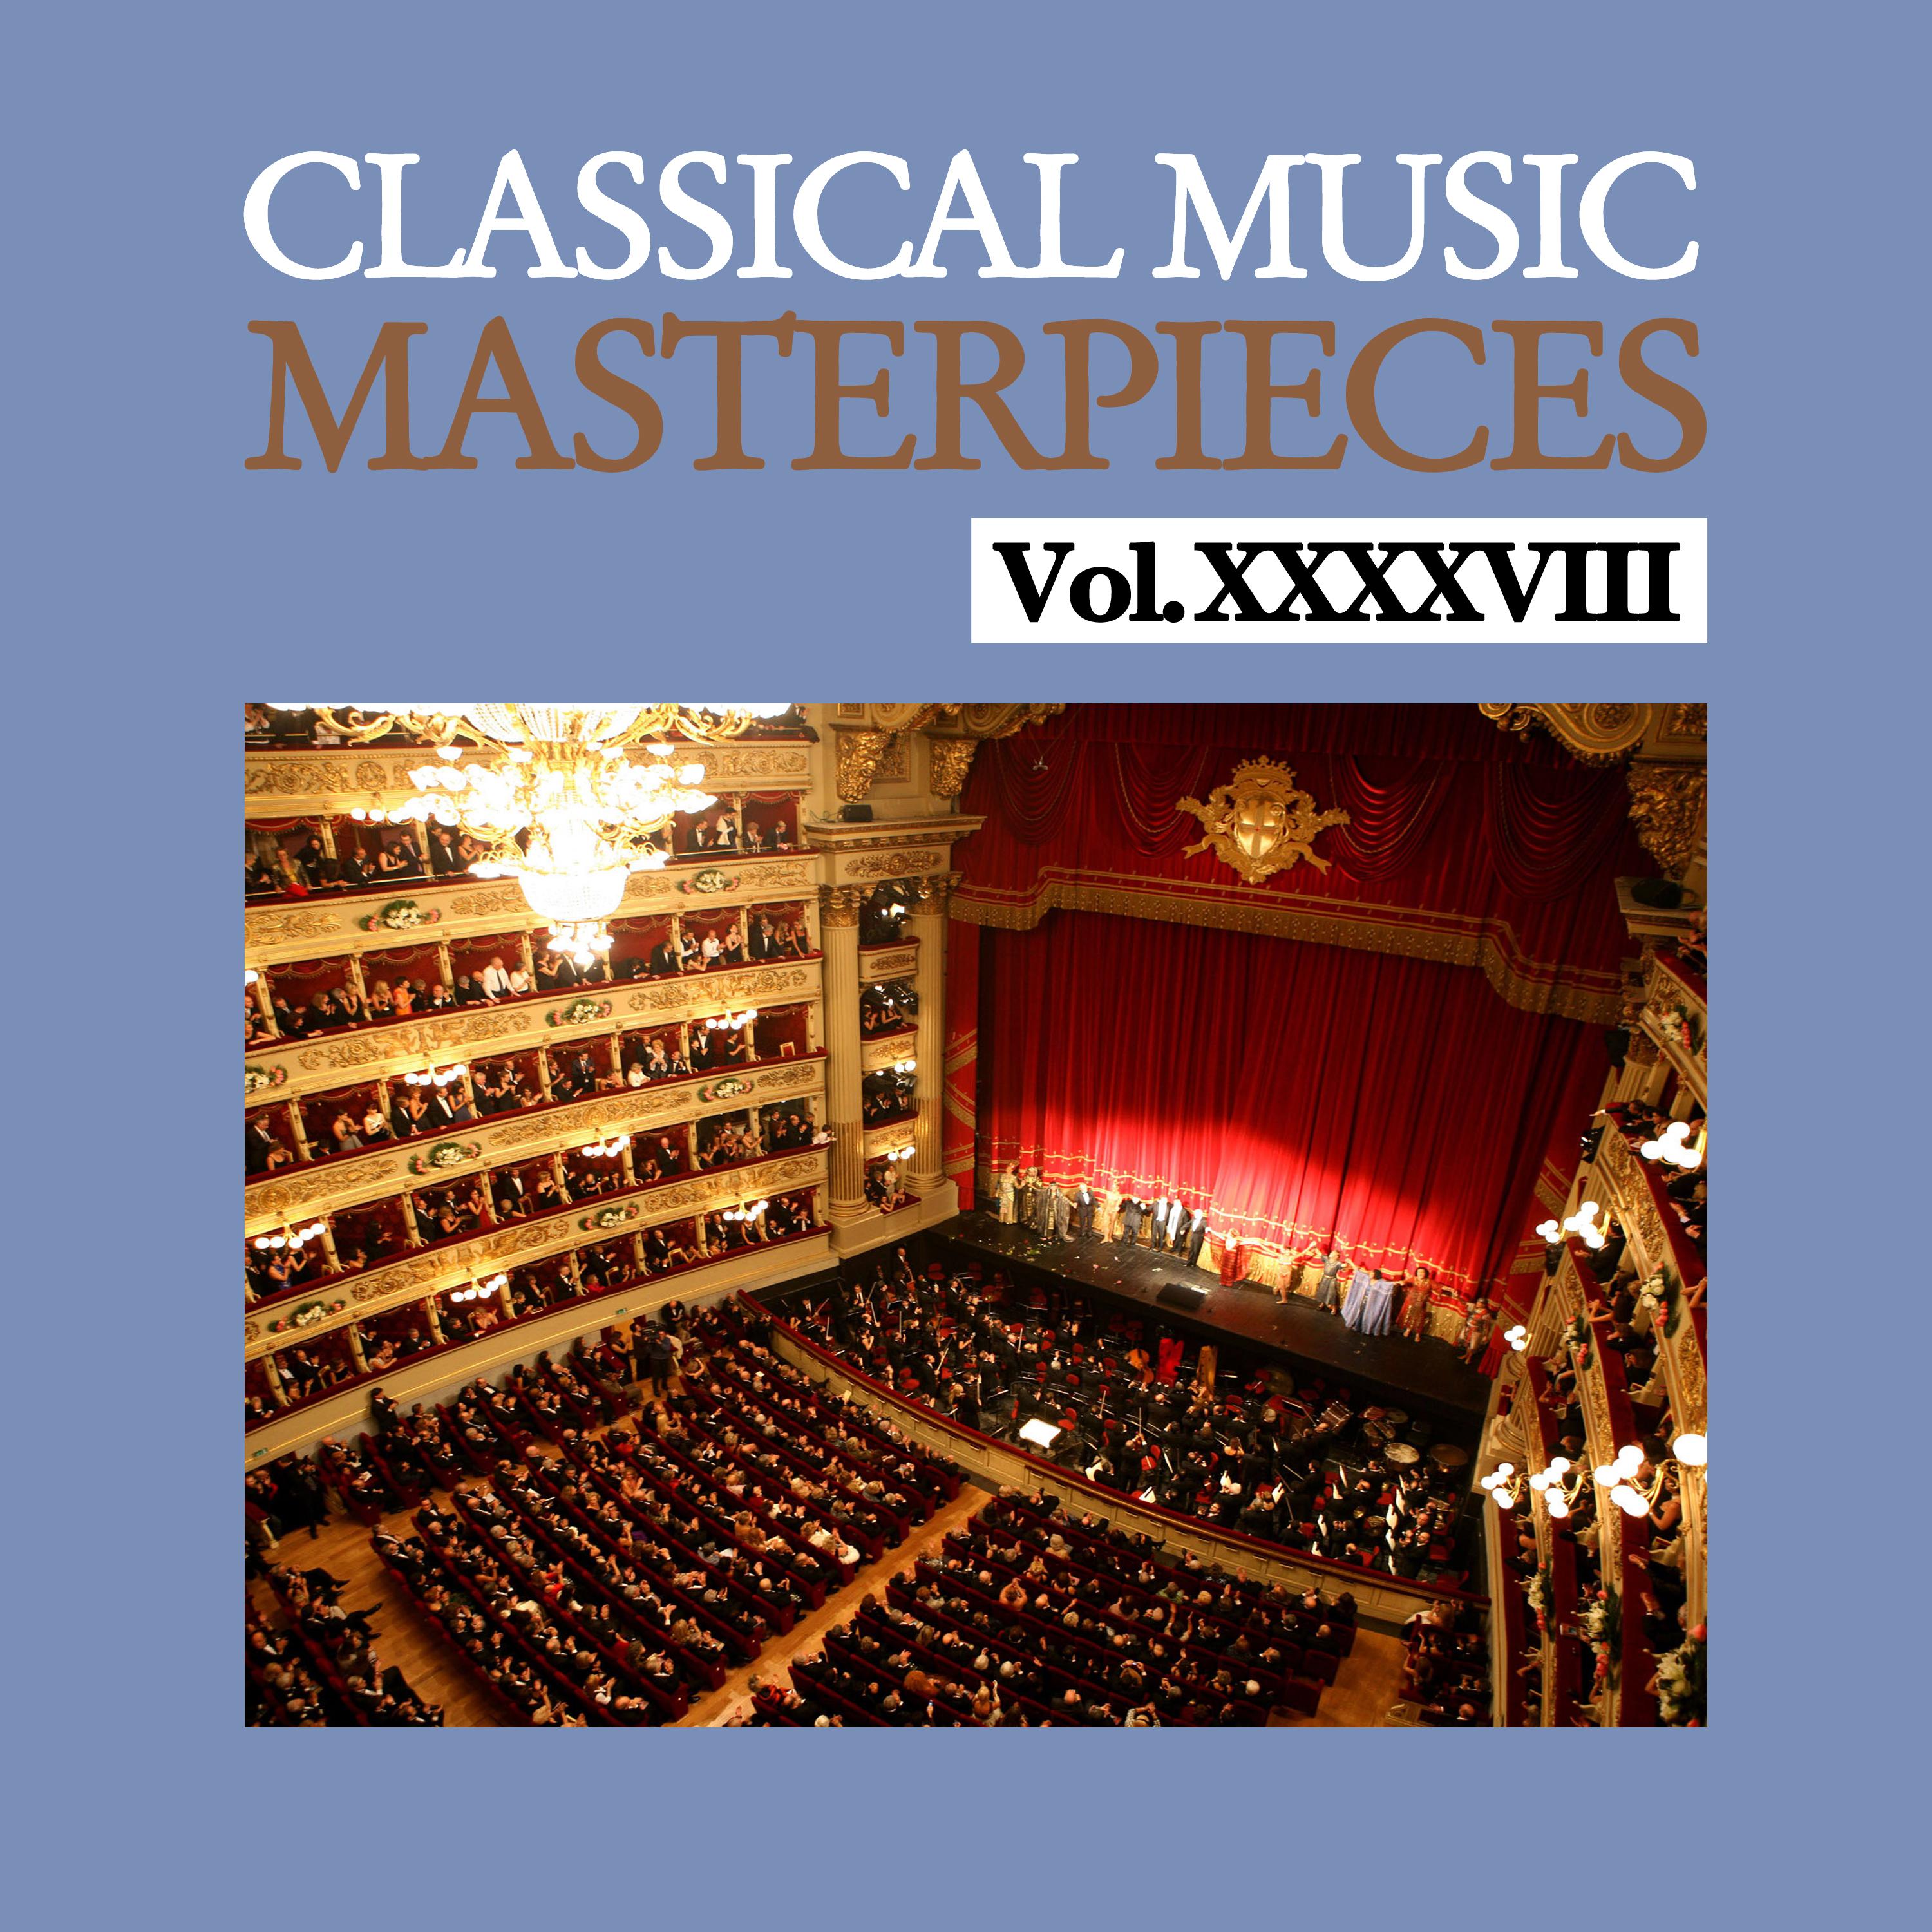 Classical Music Masterpieces, Vol. XXXXVIII